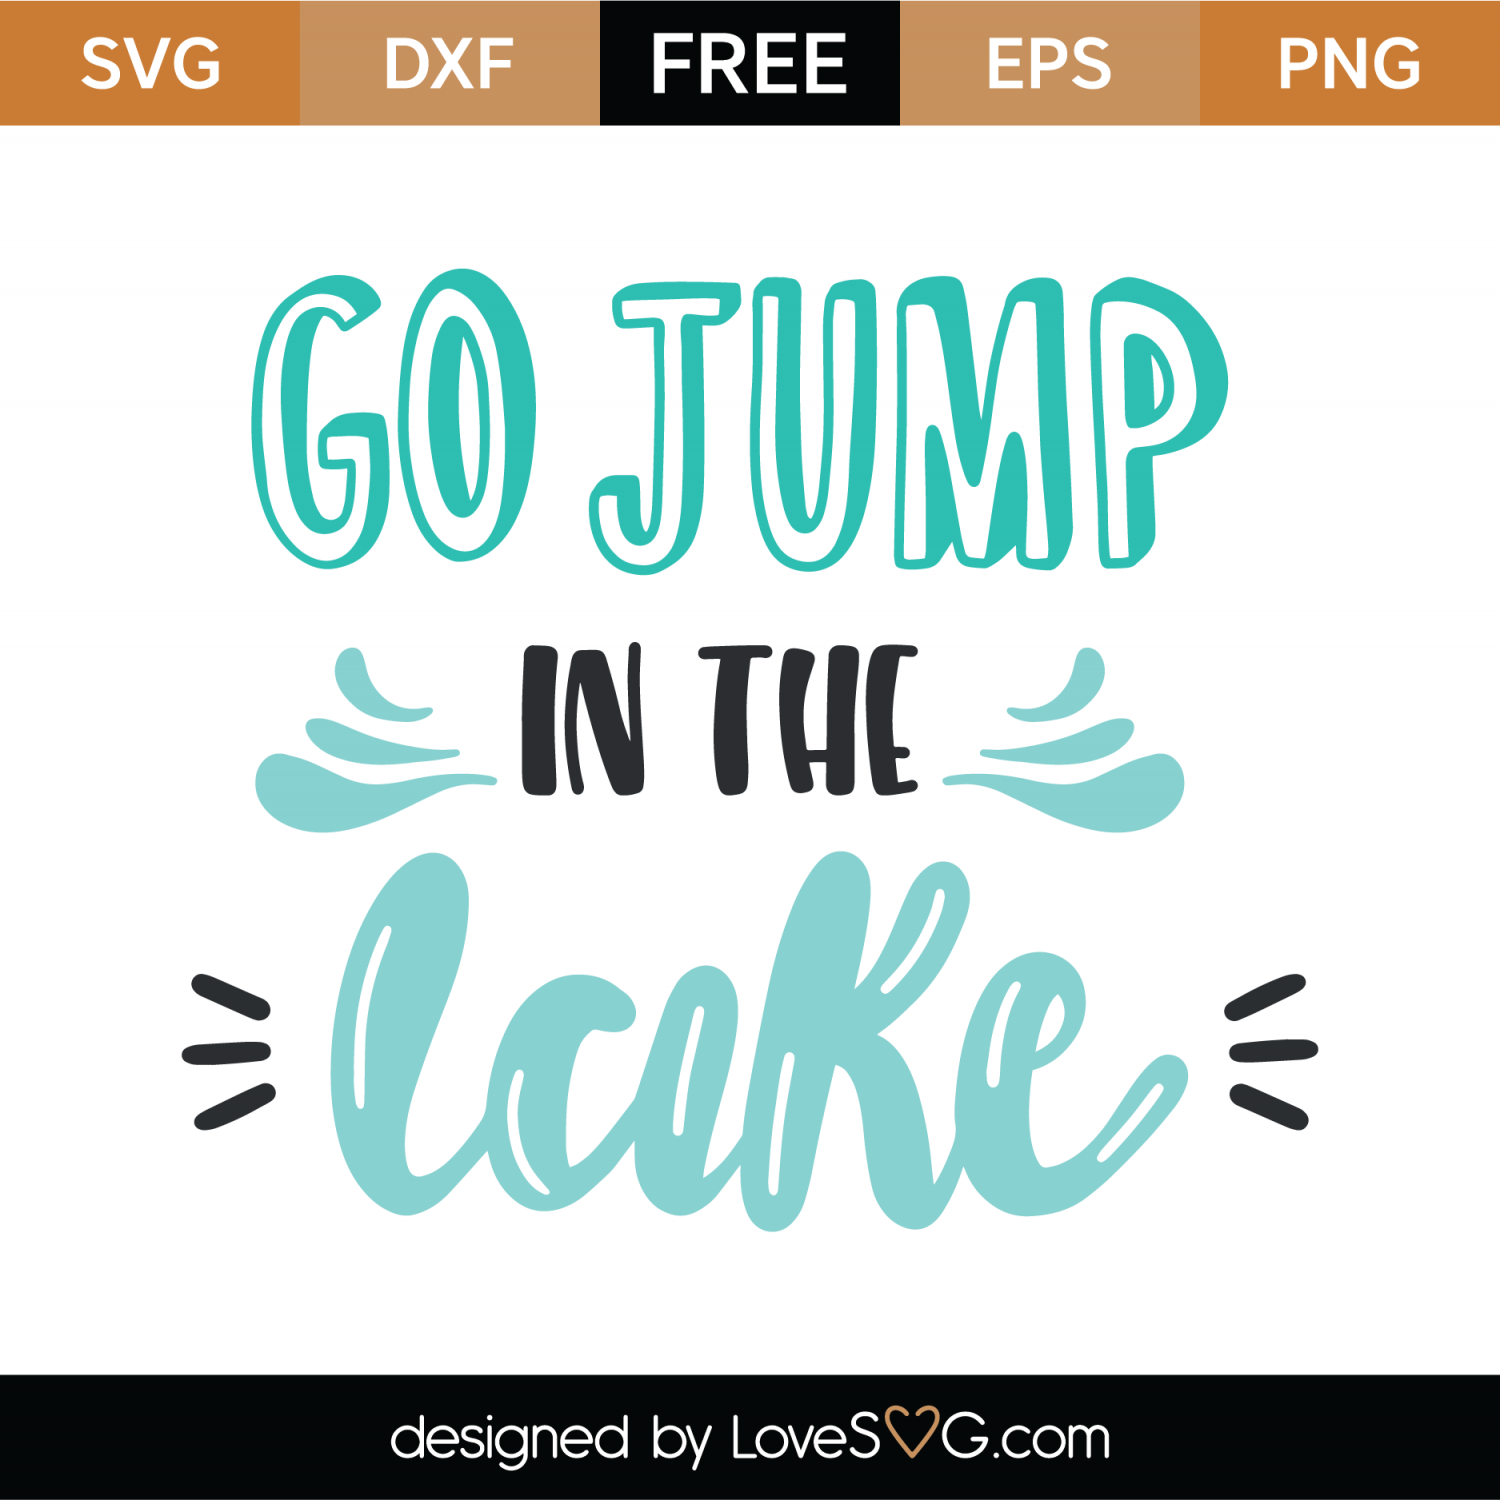 Download Free Go Jump In The Lake SVG Cut File | Lovesvg.com